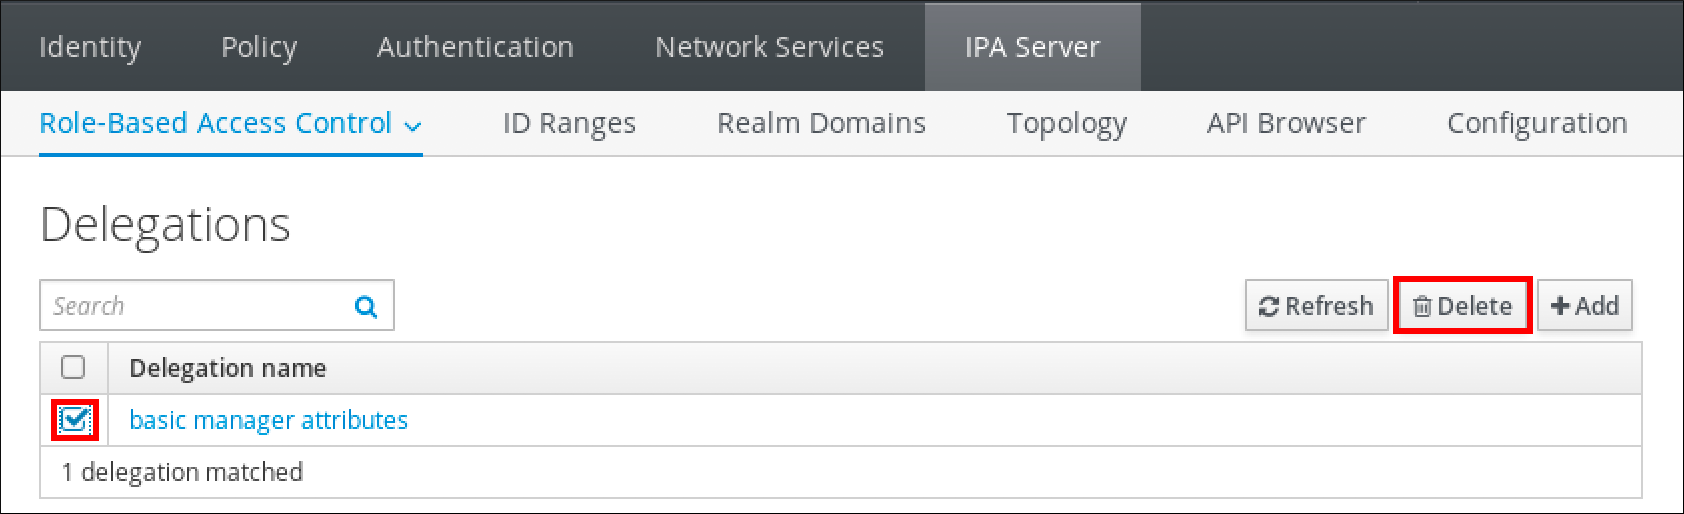 "IPA Server"选项卡的"Role-Based Access Control"子菜单的屏幕截图。"Delegations"页面显示带有委派名称的表，并且"basic manager attributes"条目的复选框已选中。"Delete"按钮已高亮显示。